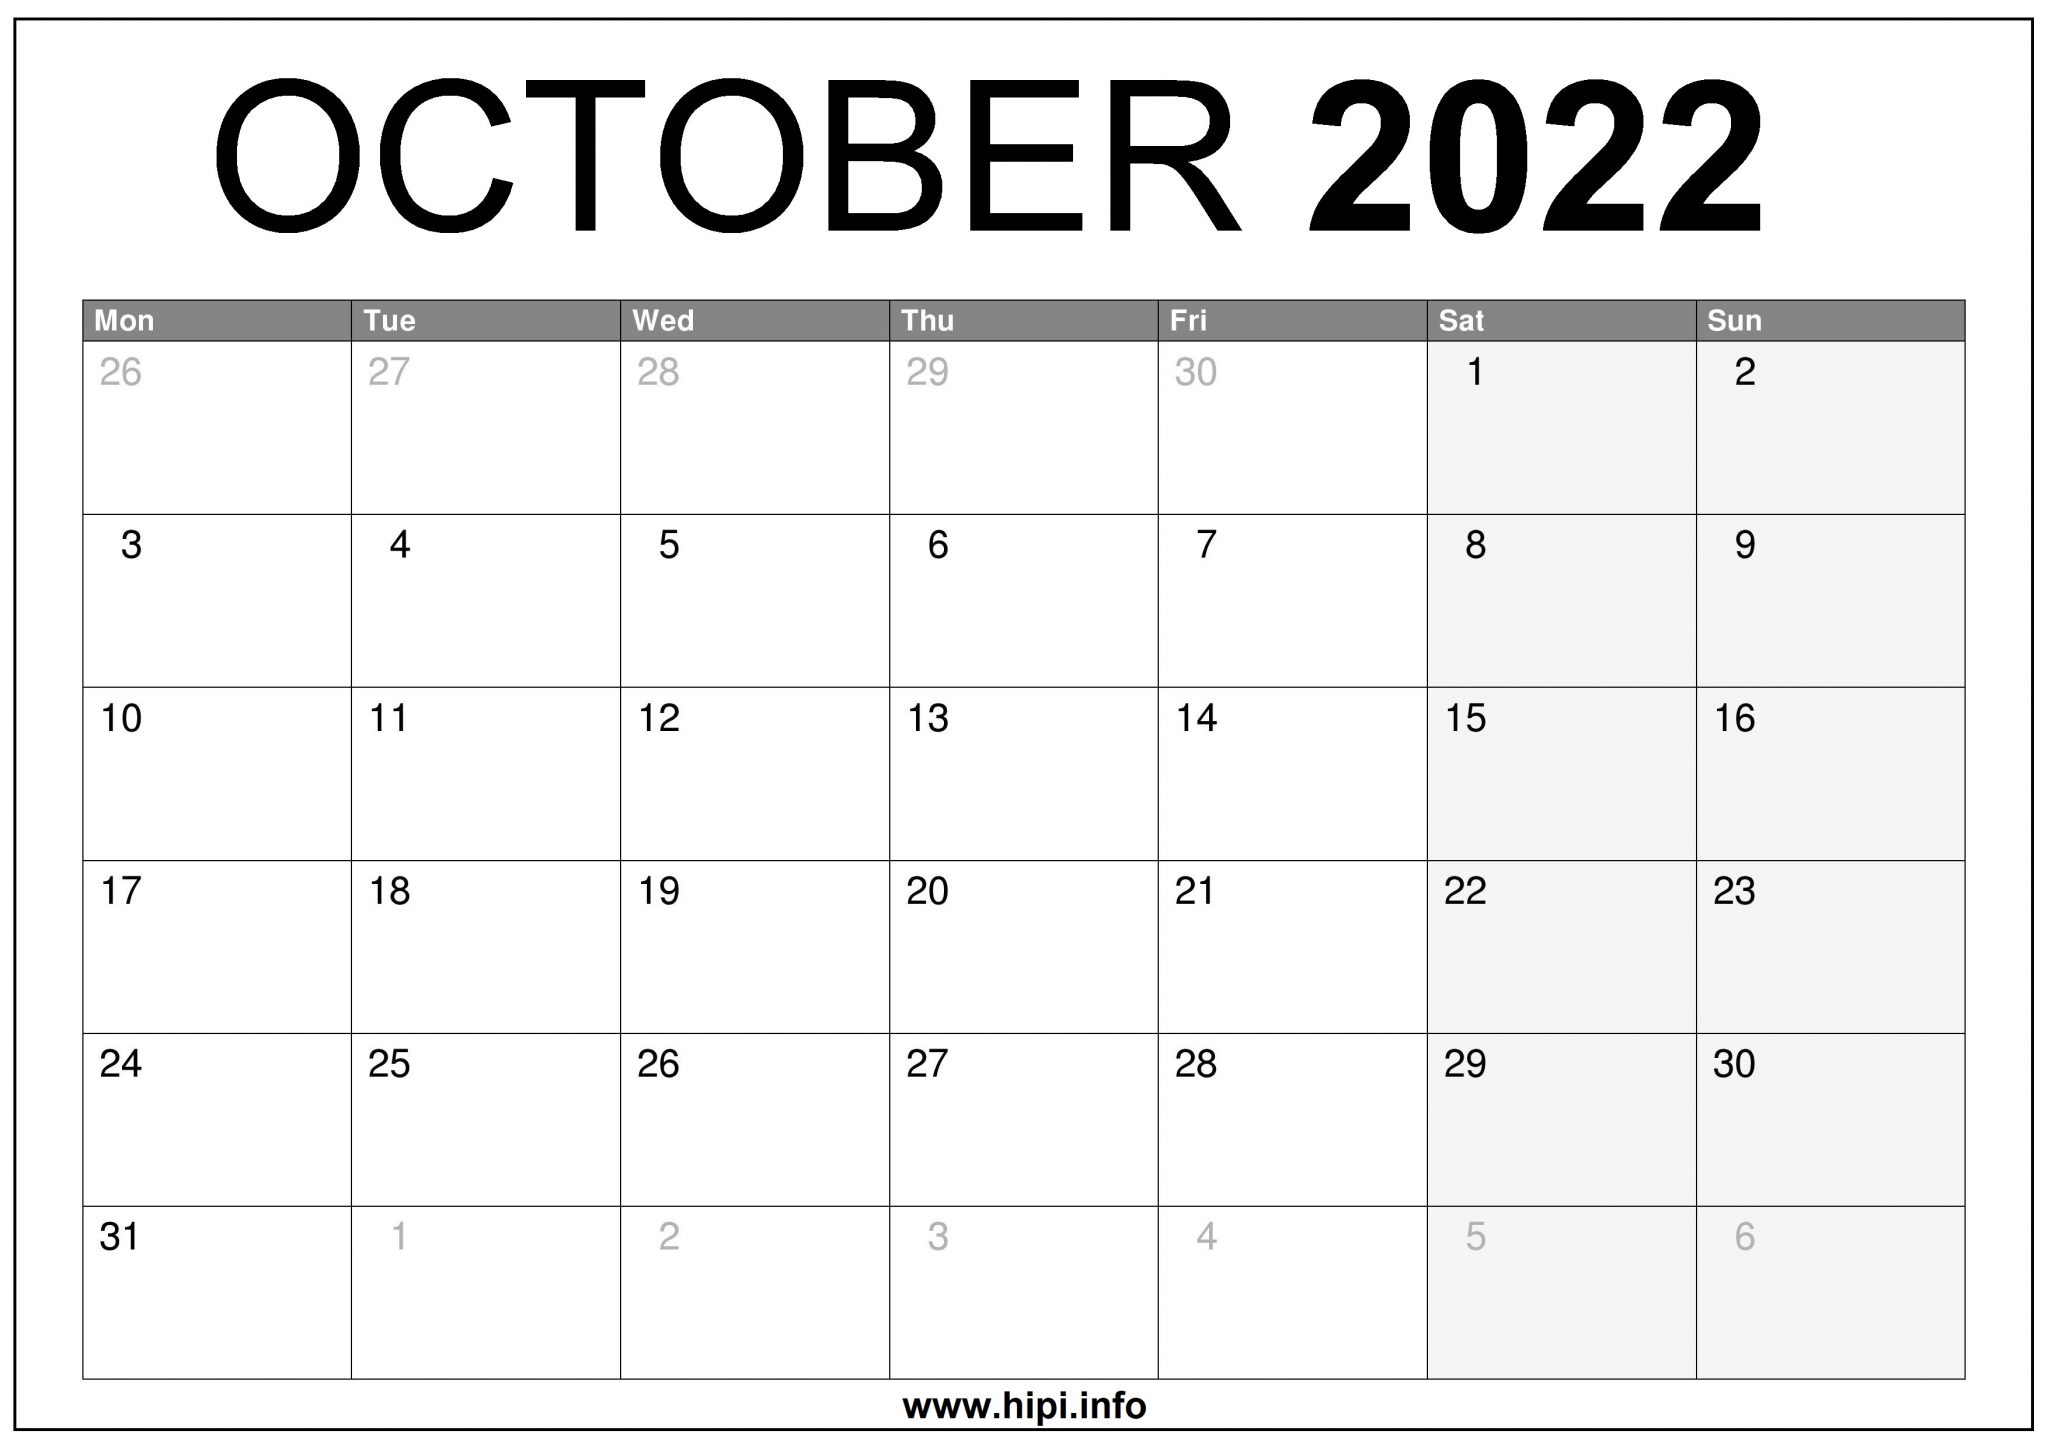 october-2022-uk-calendar-printable-free-hipi-info